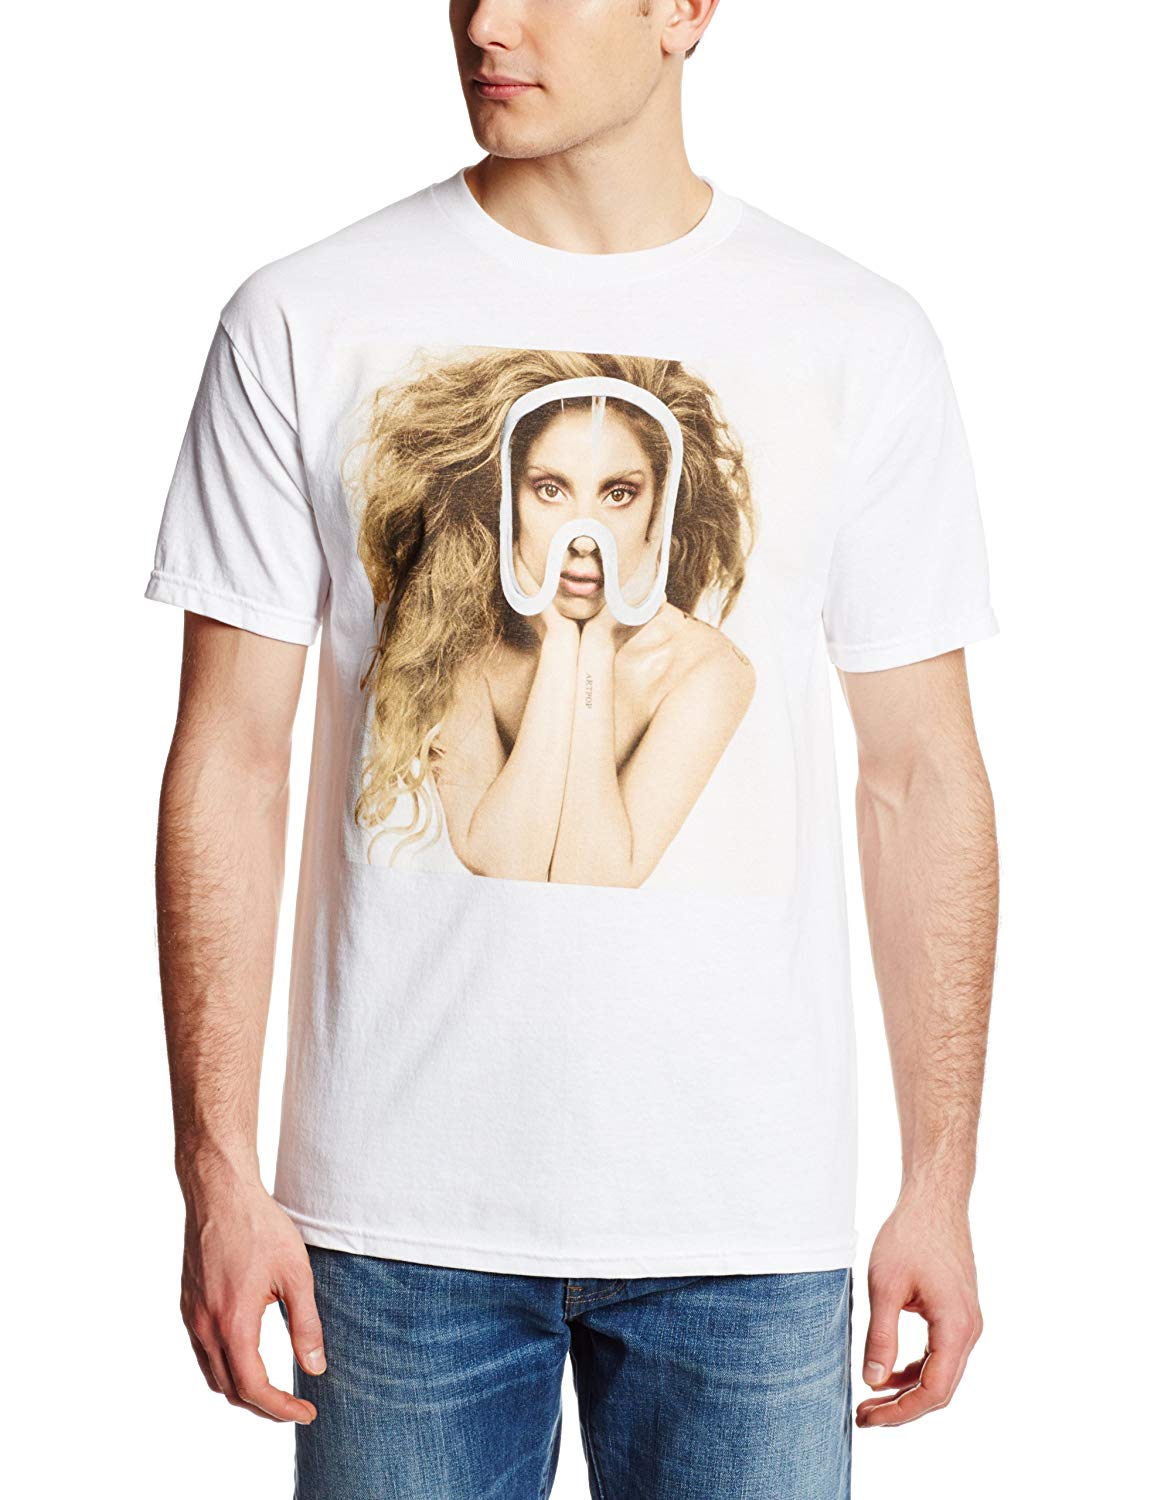 LADY GAGA Art Pop Teaser T-Shirt White - image 1 of 2